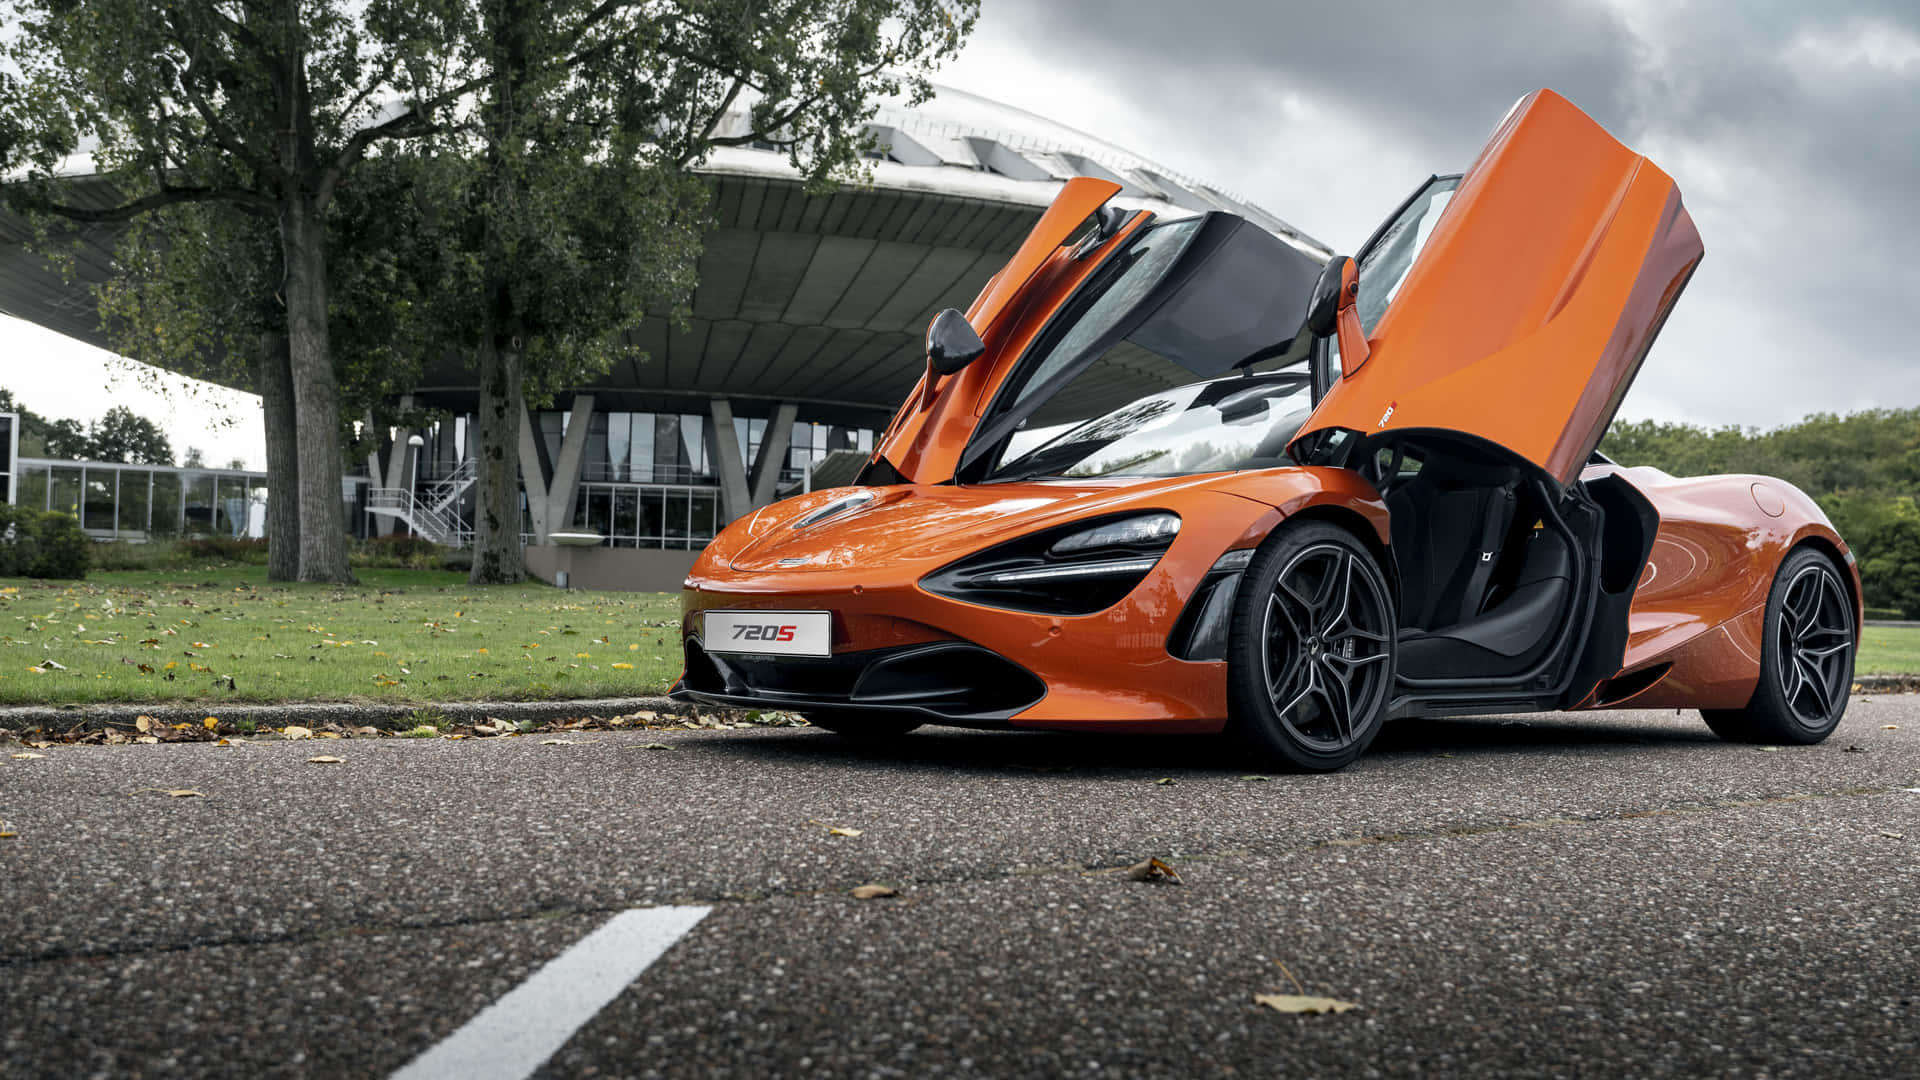 The breathtaking 4k McLaren 720s